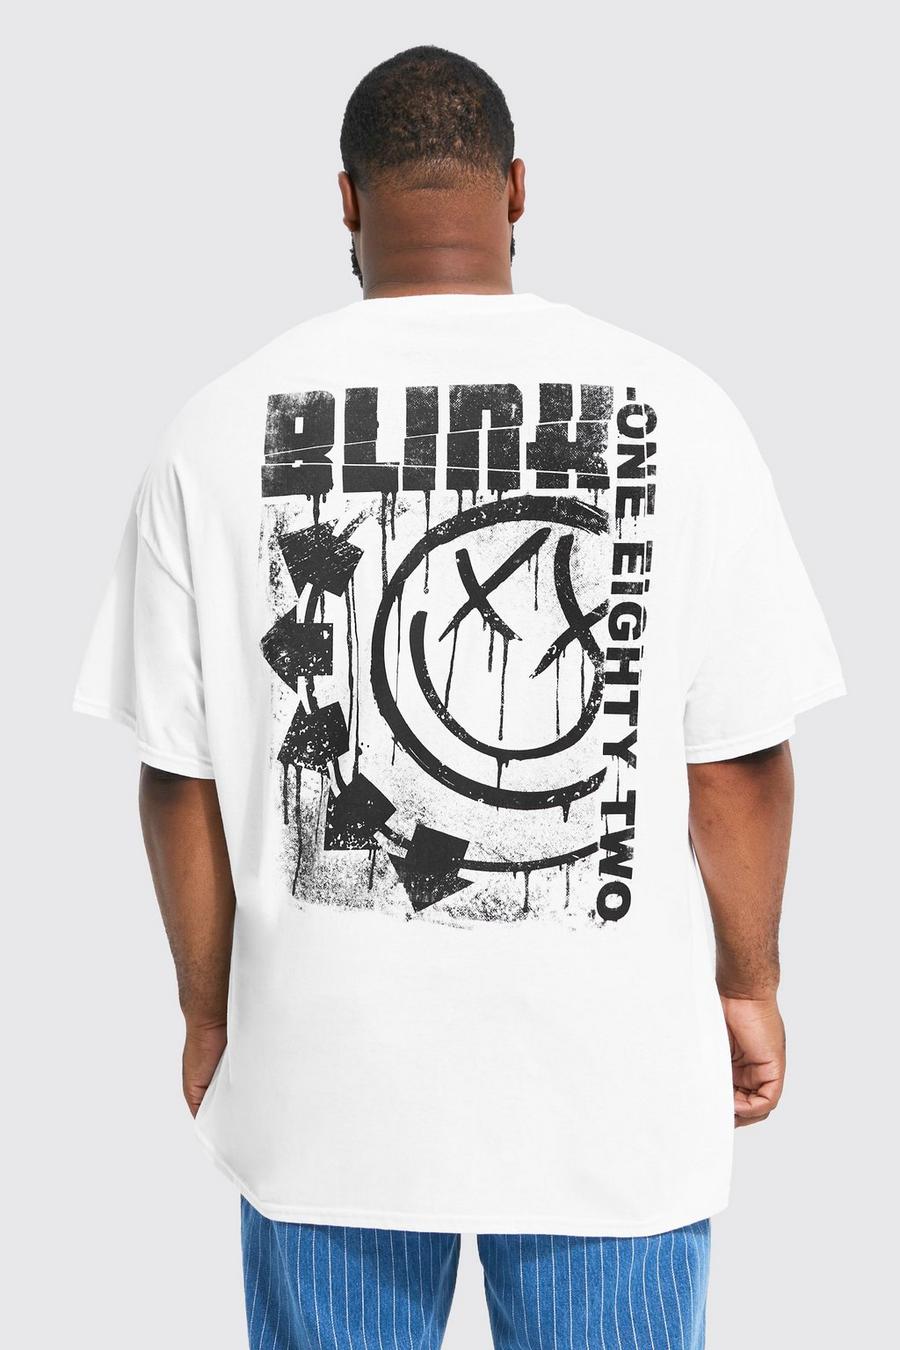 White vit Plus Blink 182 License T-shirt image number 1